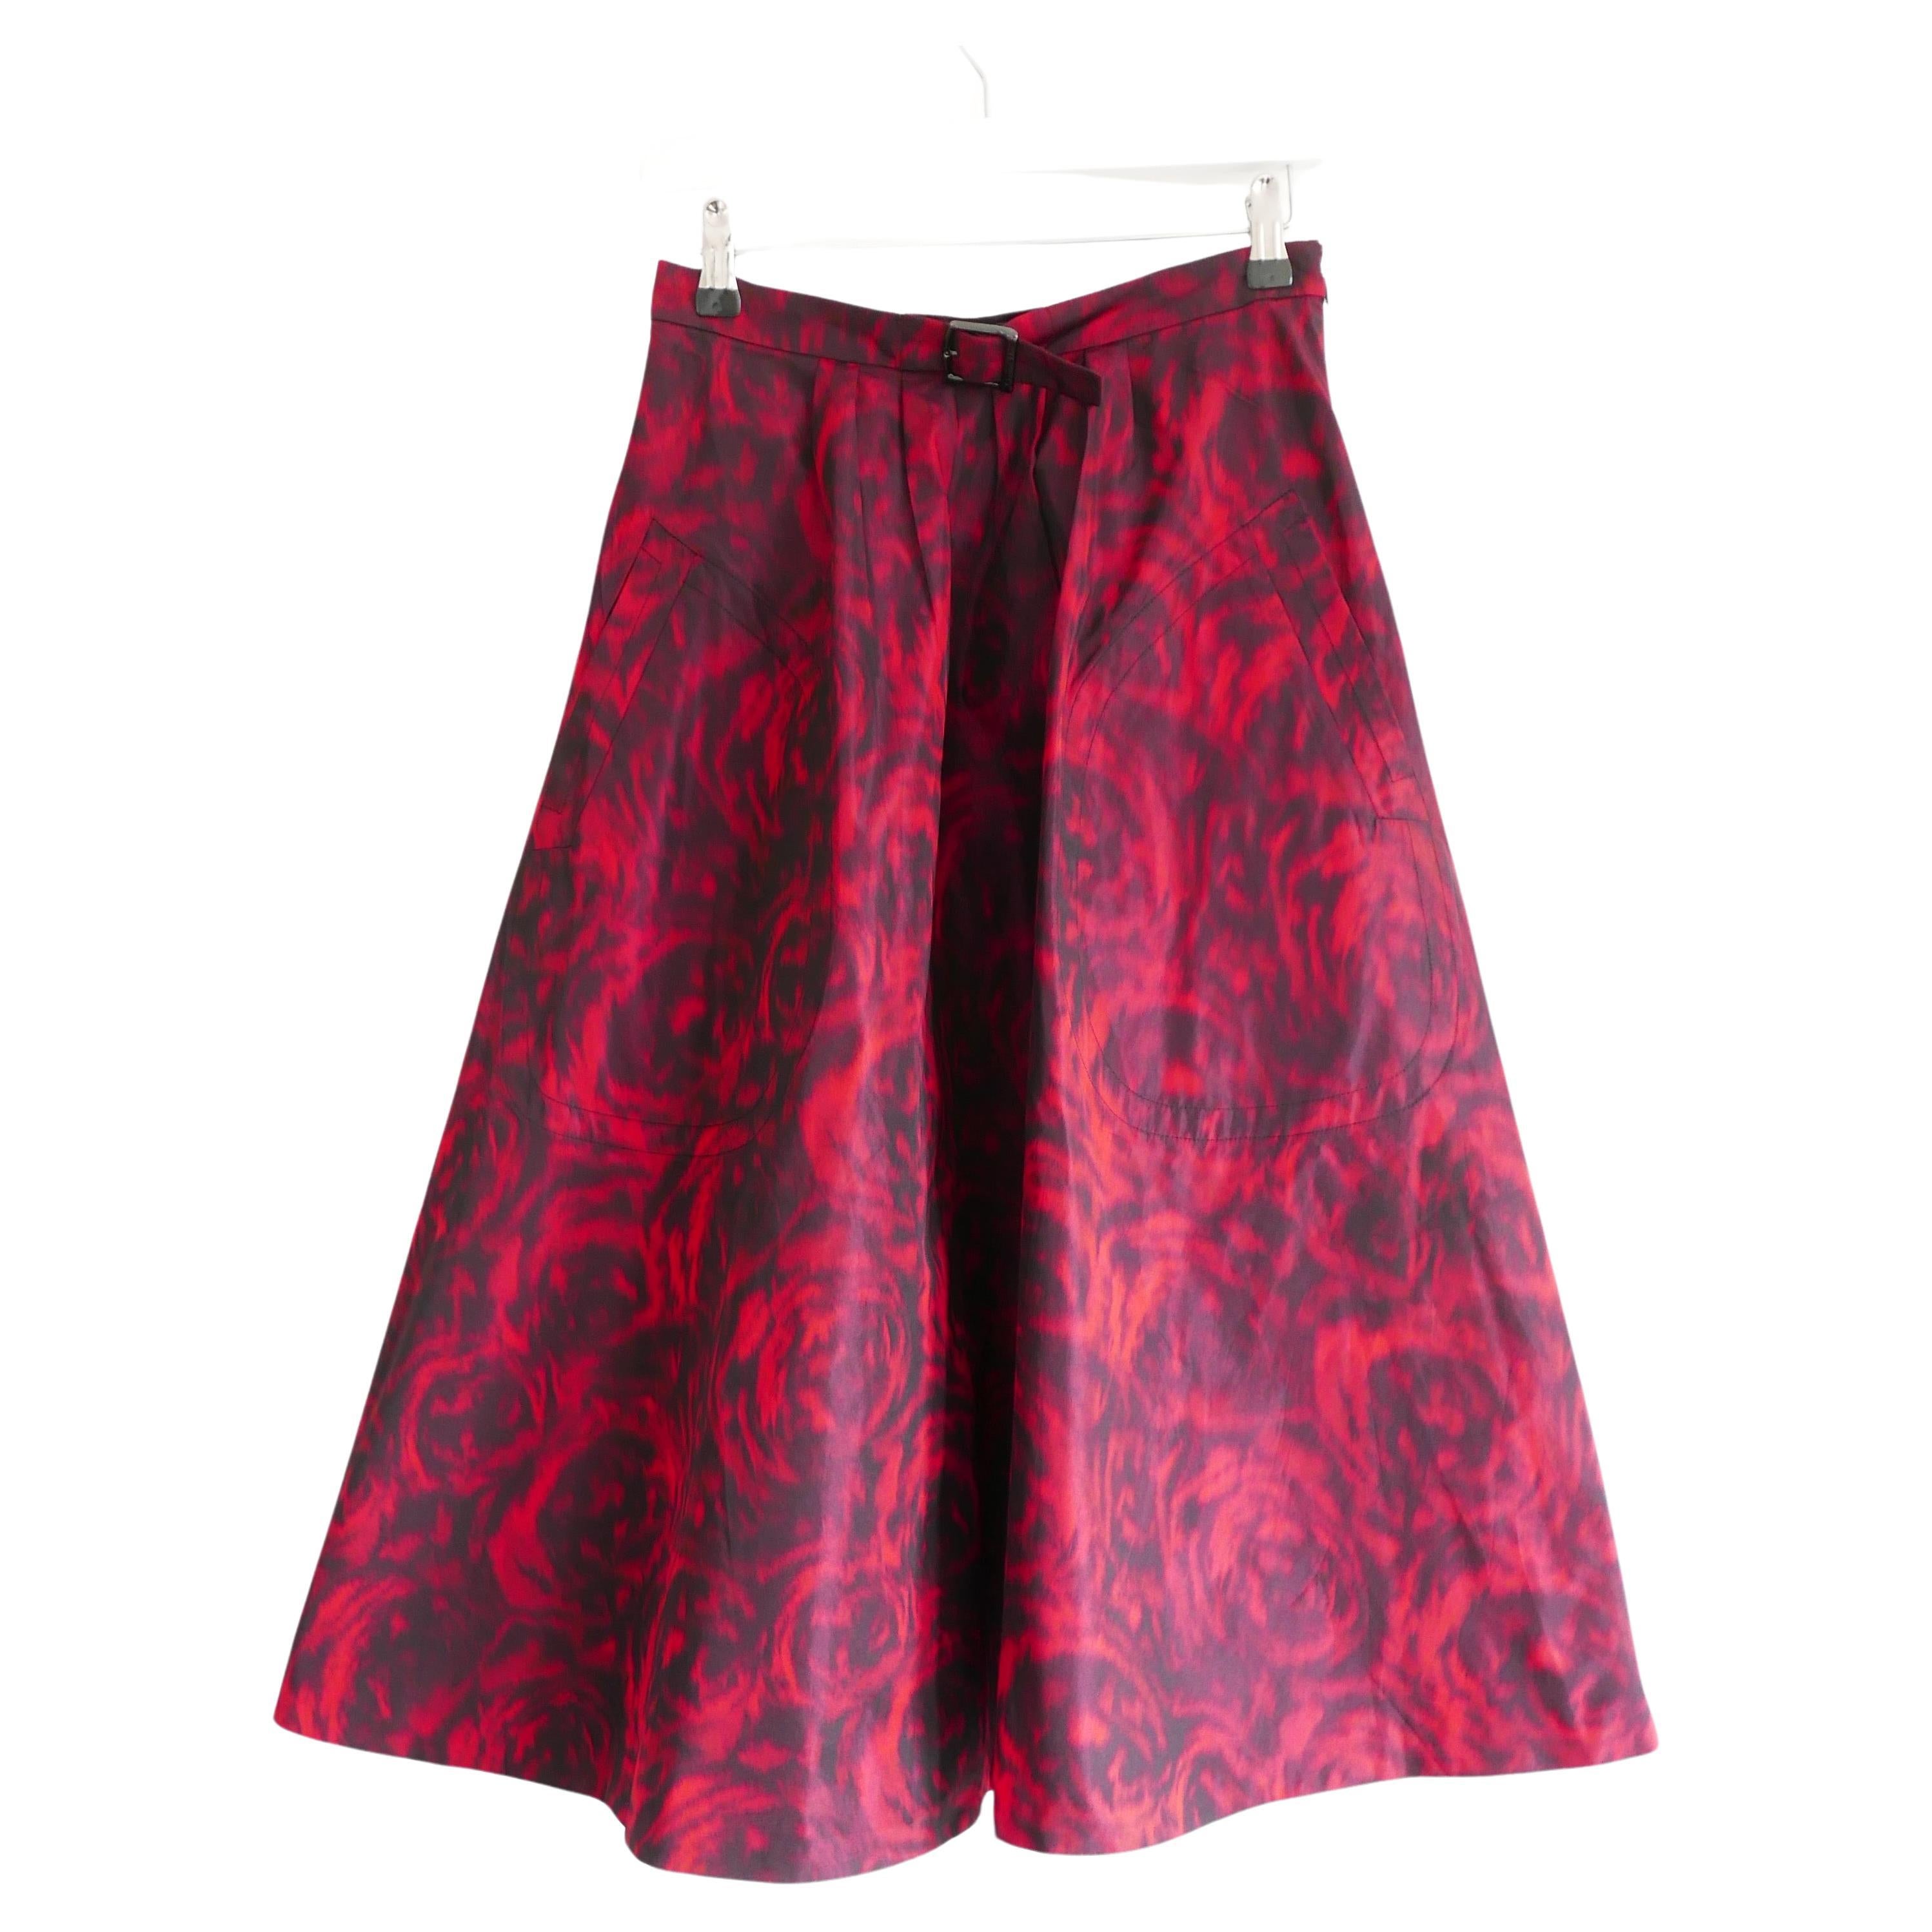 Dior Fall 2021 Blurred Rose Print Taffeta Midi Skirt